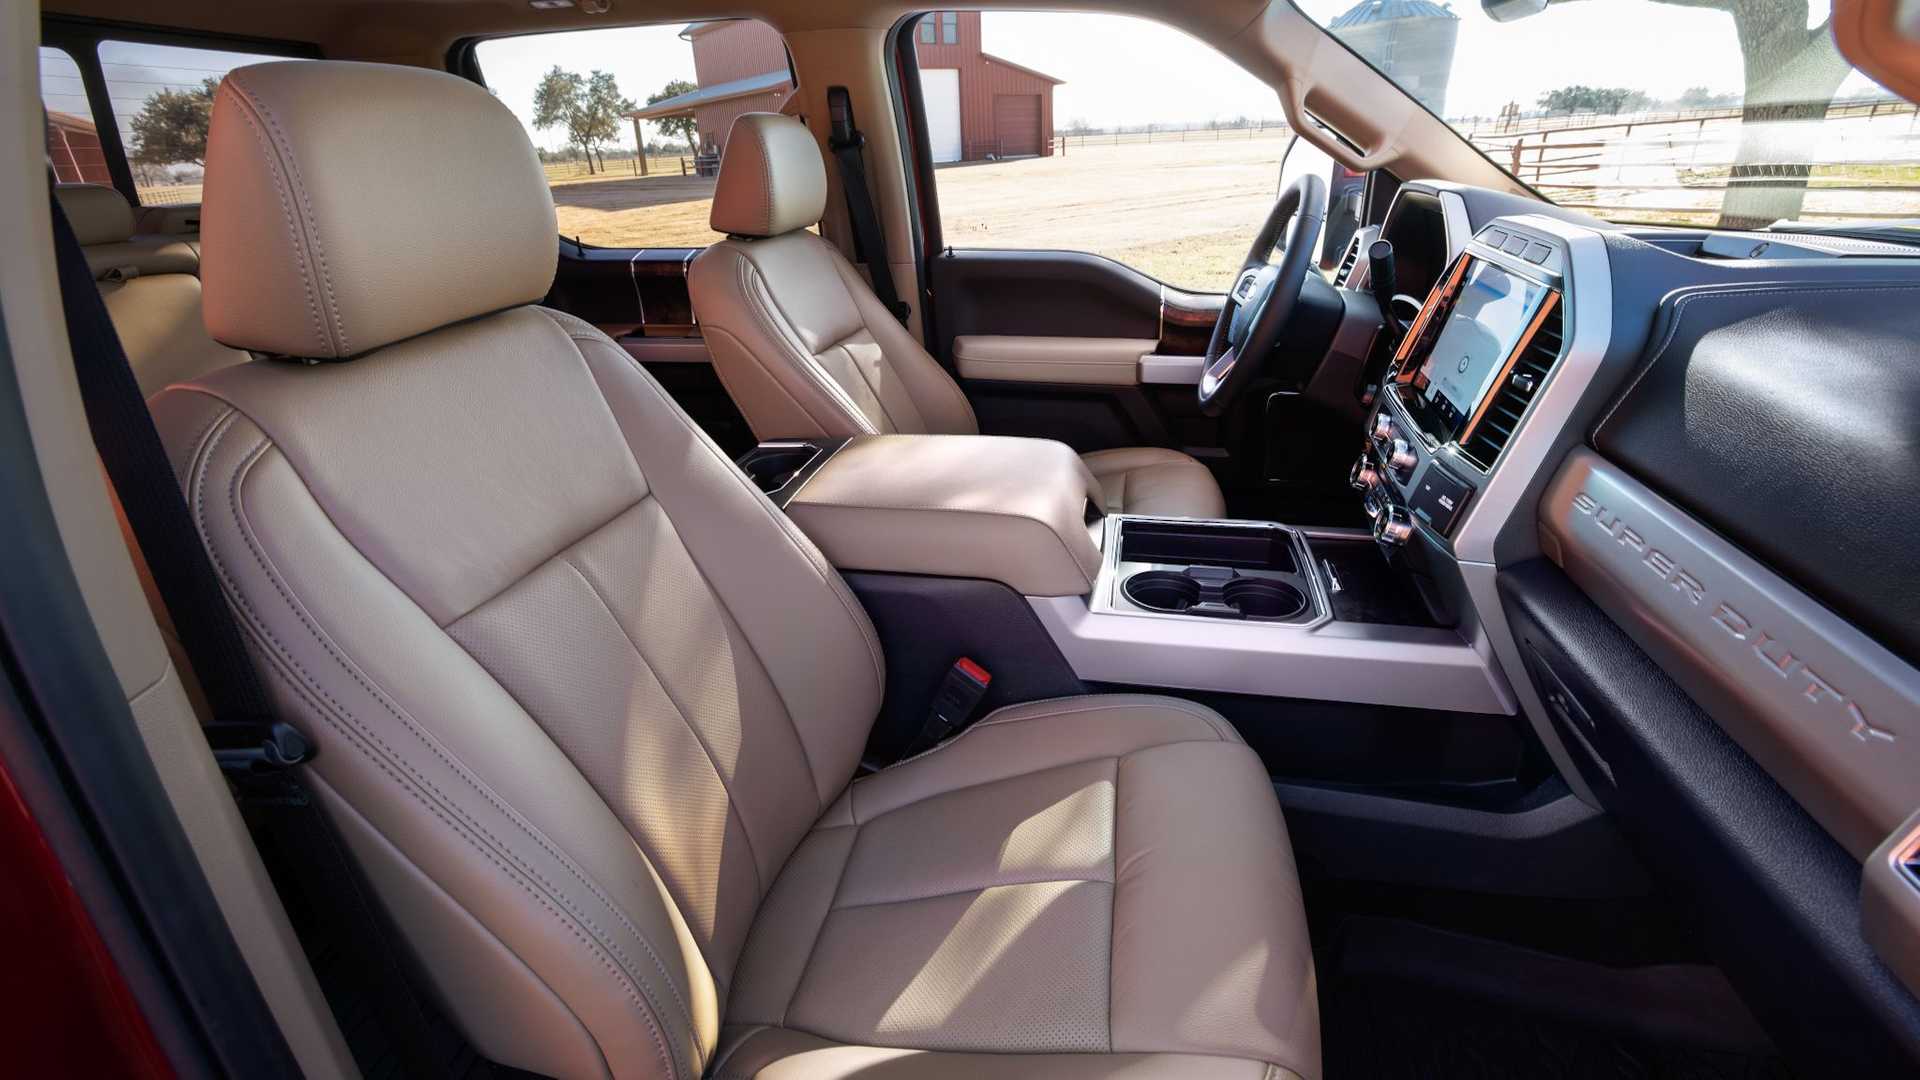 2022-ford-super-duty-interior-1.jpg